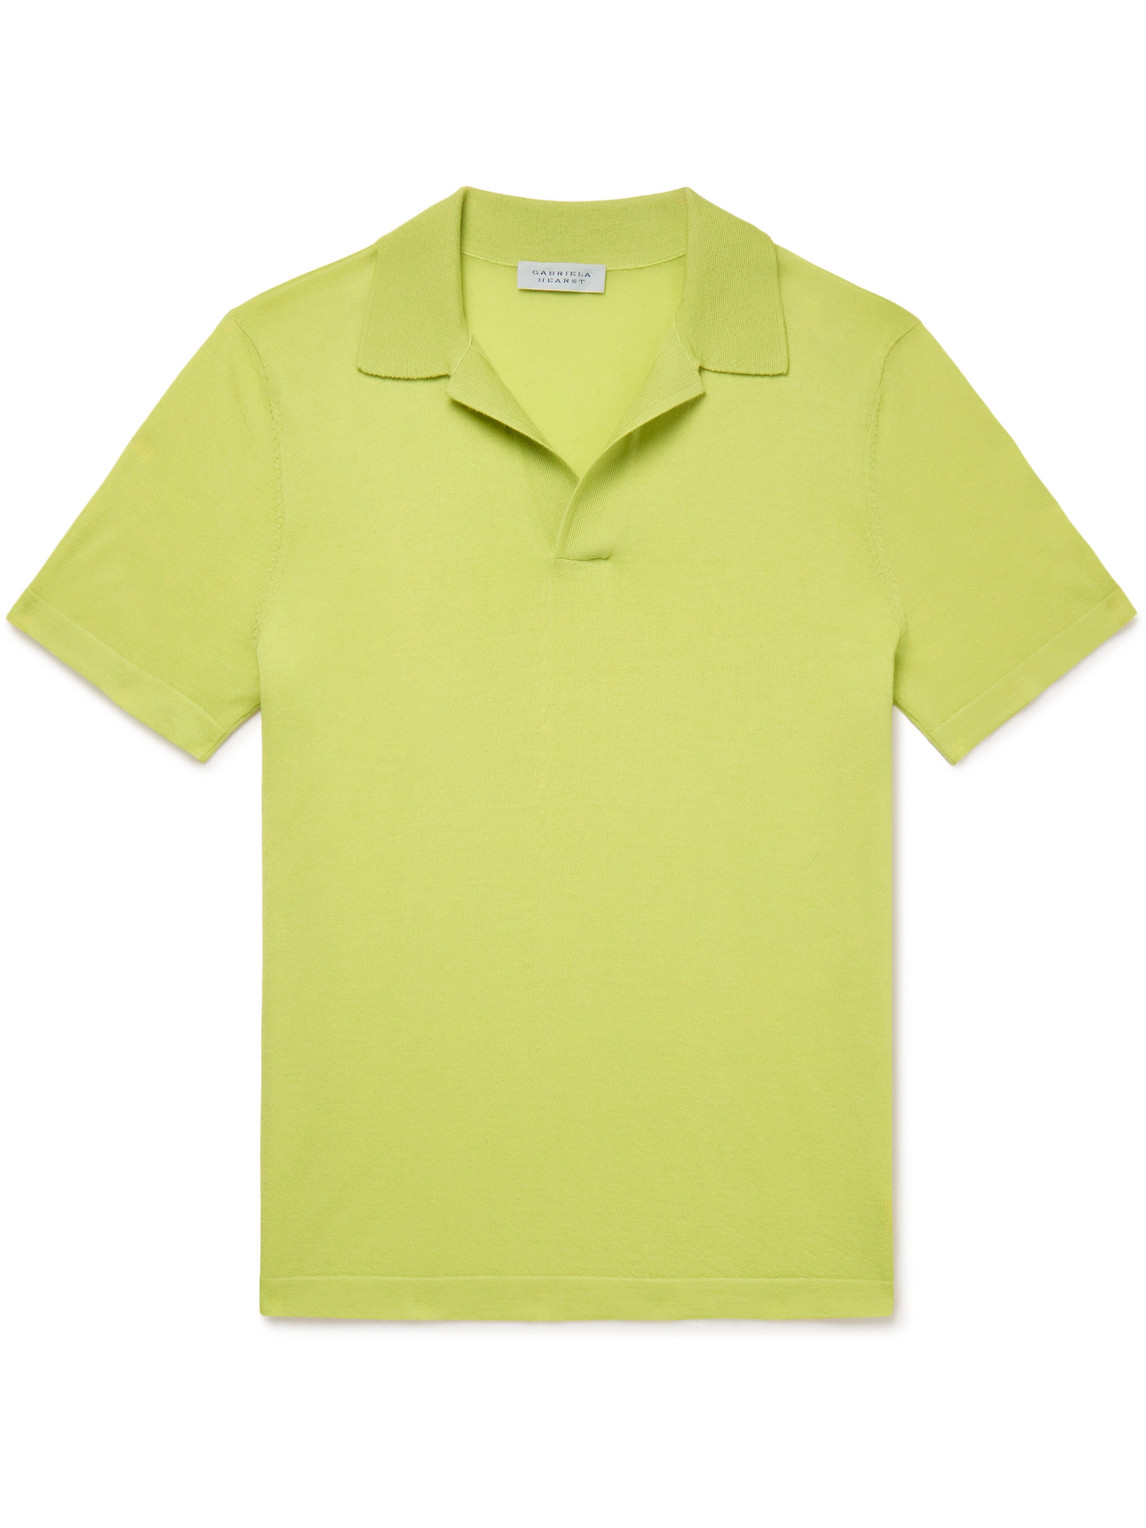 Gabriela Hearst - Stendhal Cashmere Polo Shirt - Men - Green - S von Gabriela Hearst